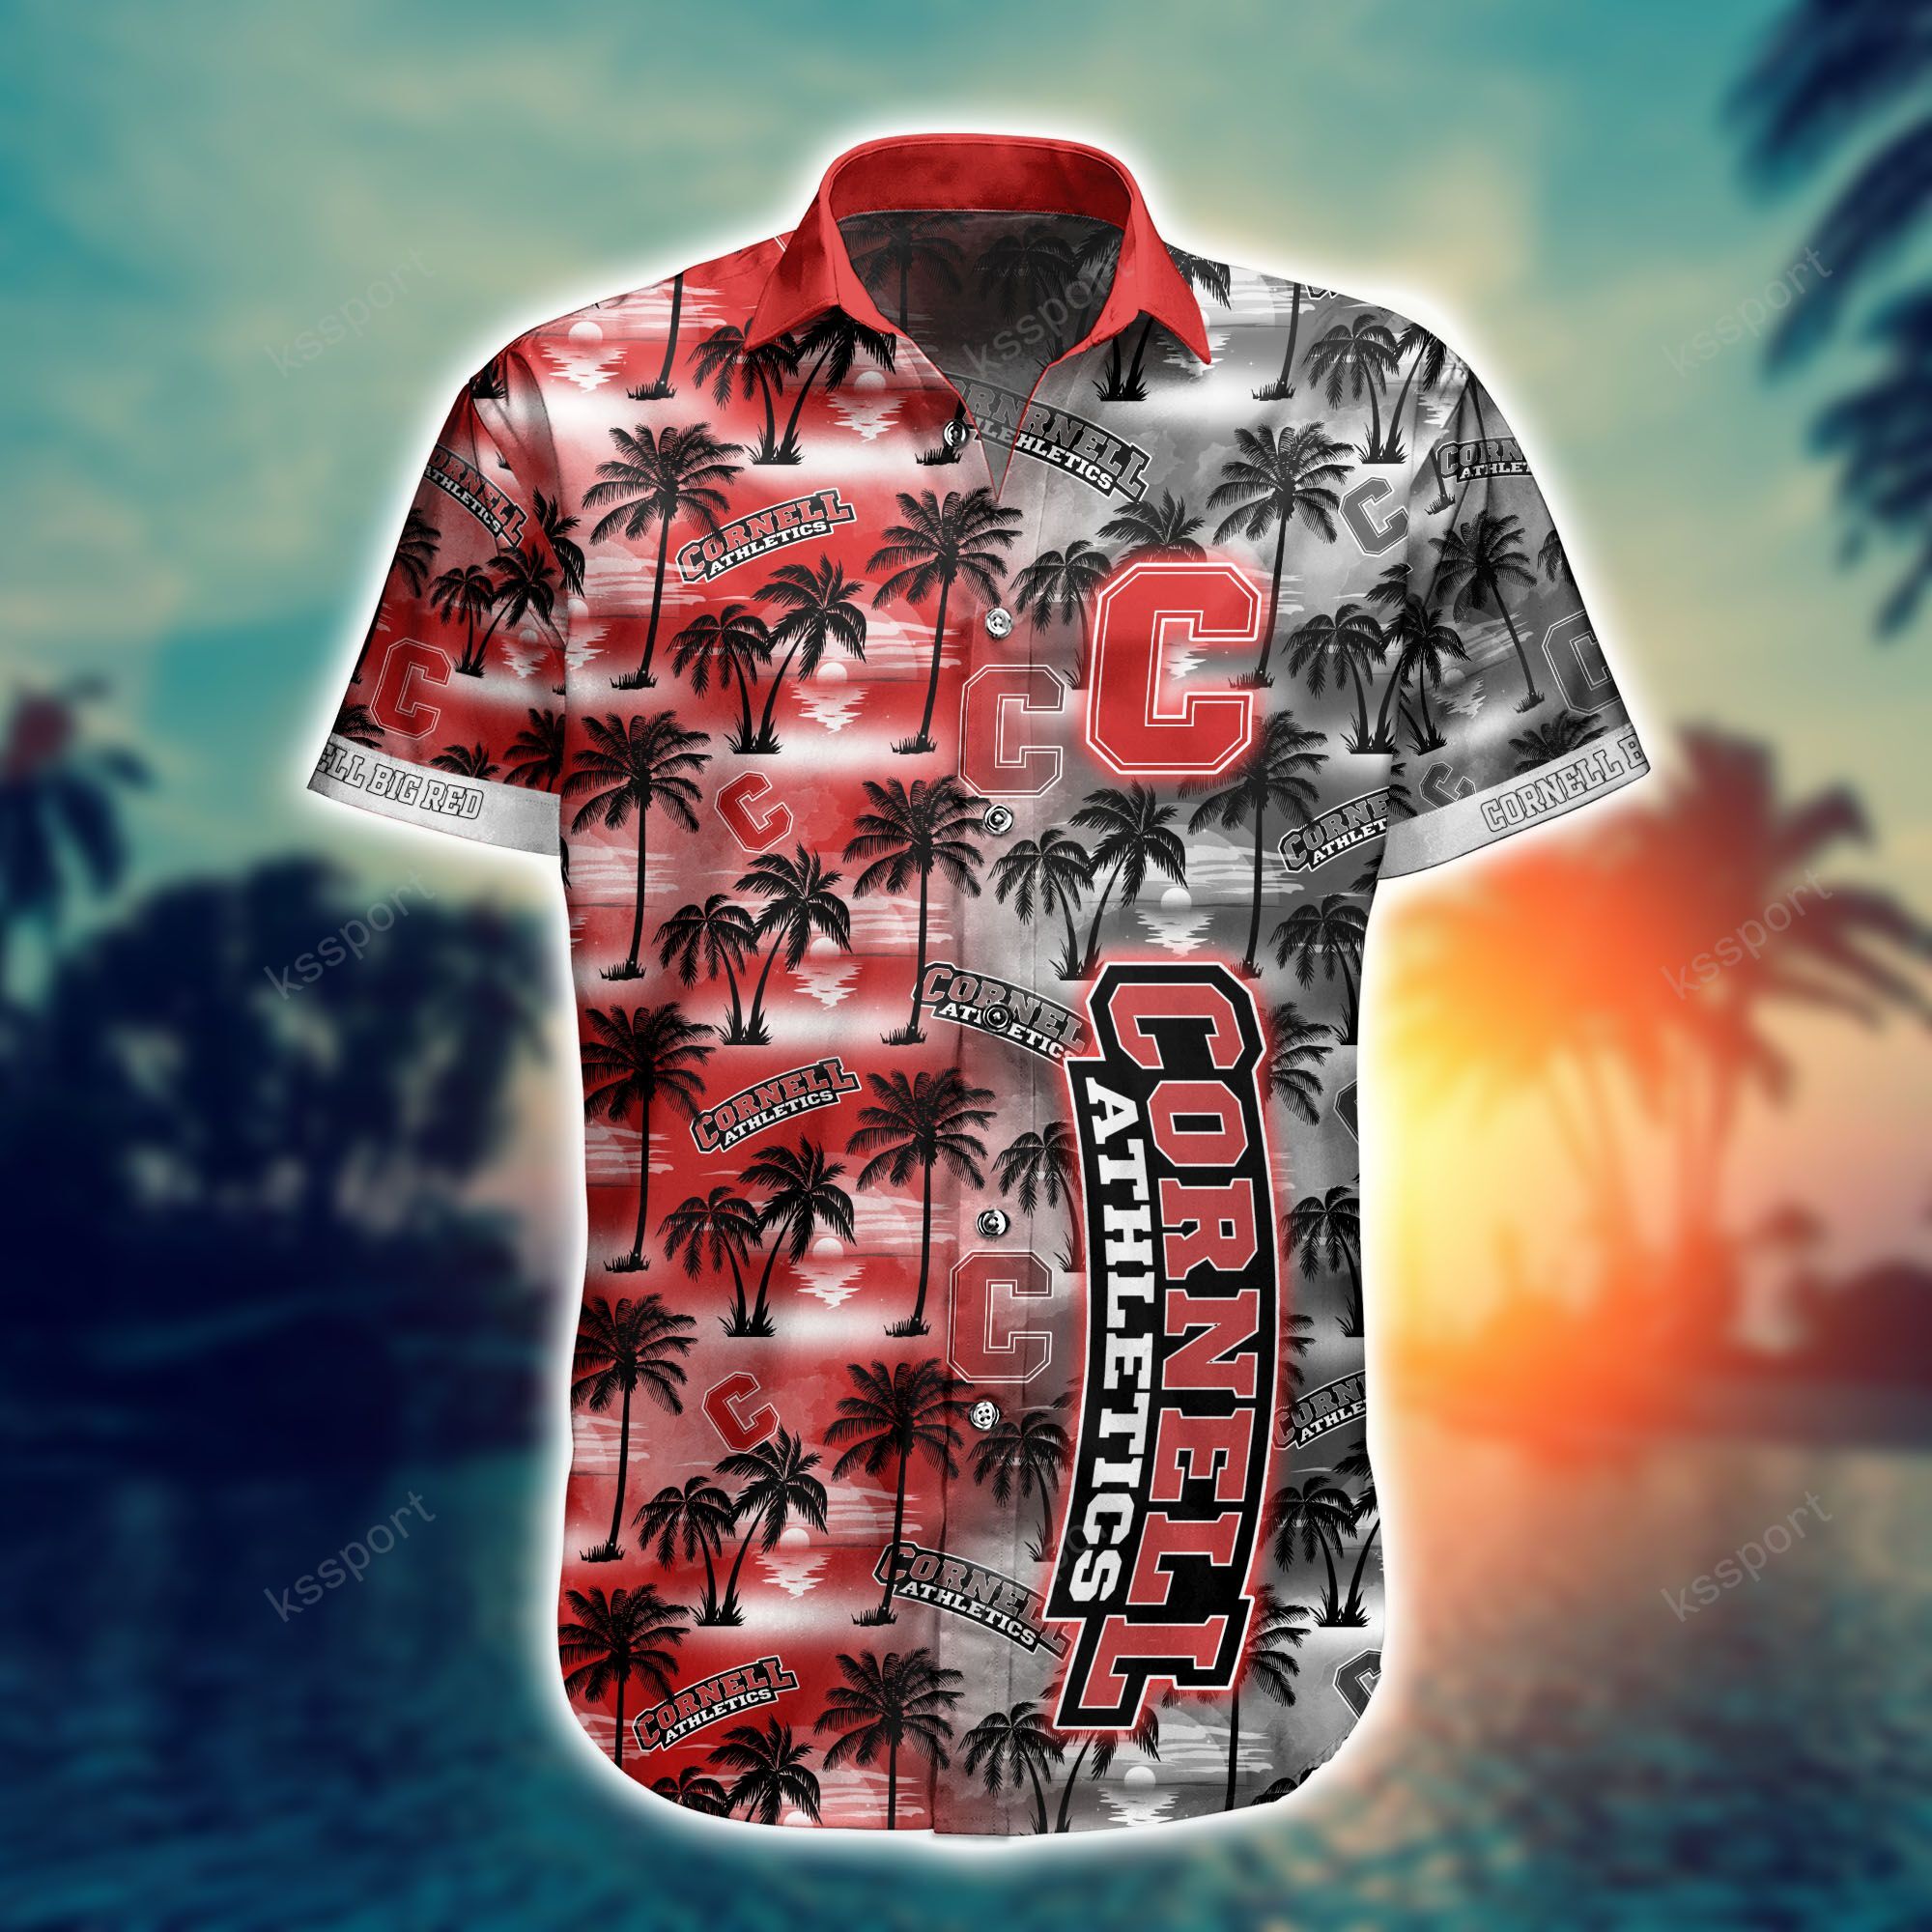 Hawaiian shirt and shorts is a great way to look stylish at a beach party 7